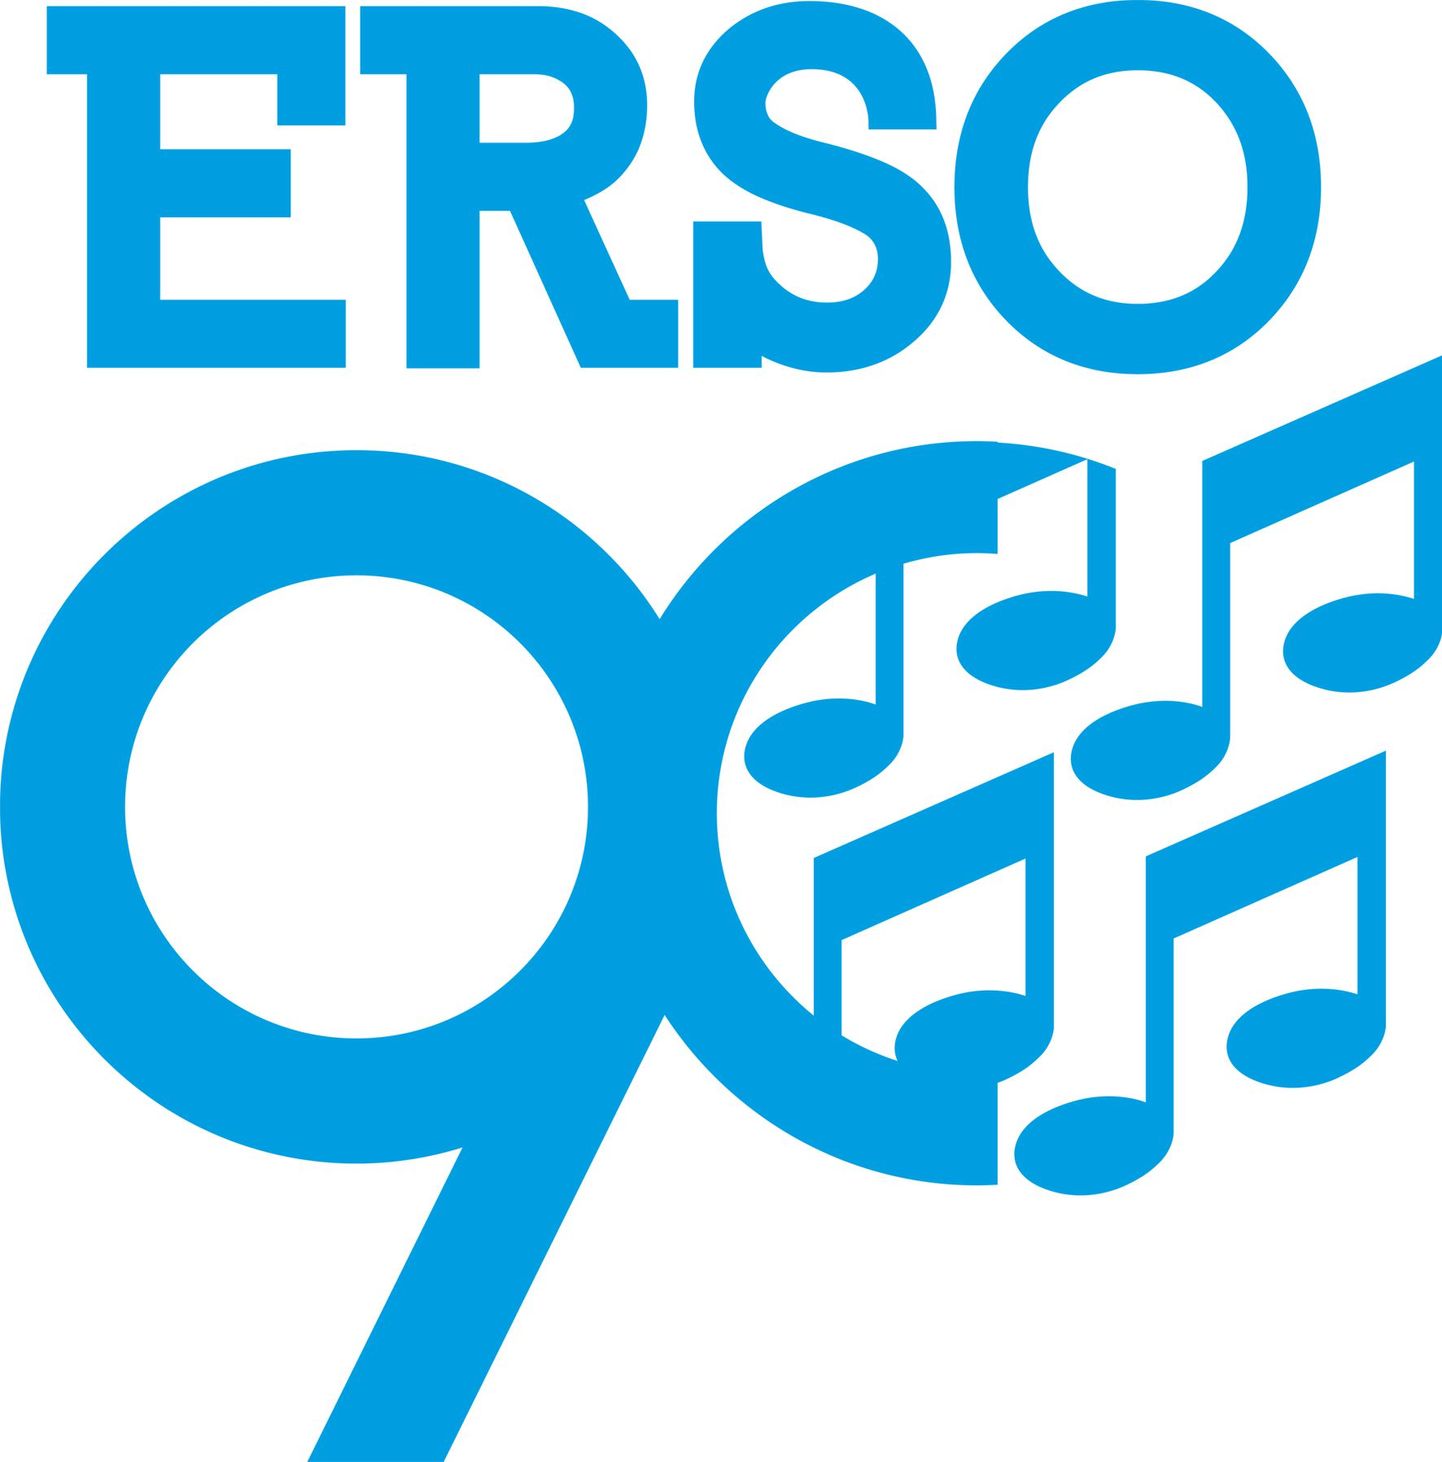 ERSO 90. hooaeg algab reedel, 9. septembril.